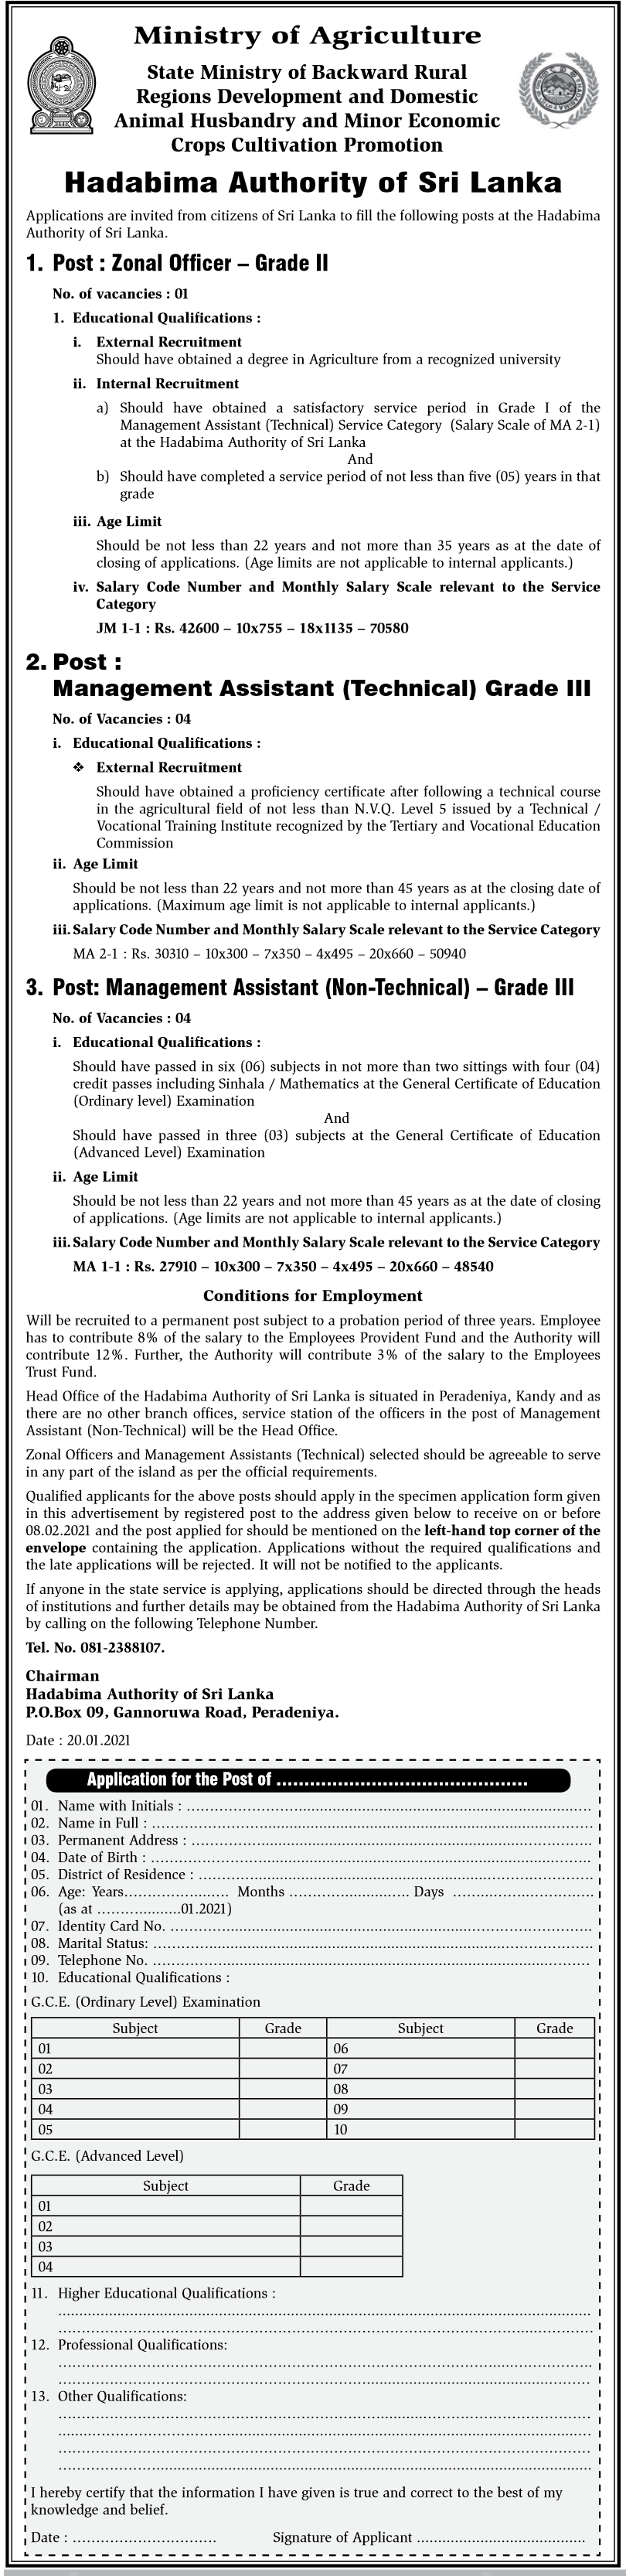 Management Assistant (Technical) Grade III, Zonal Officer (Grade II)